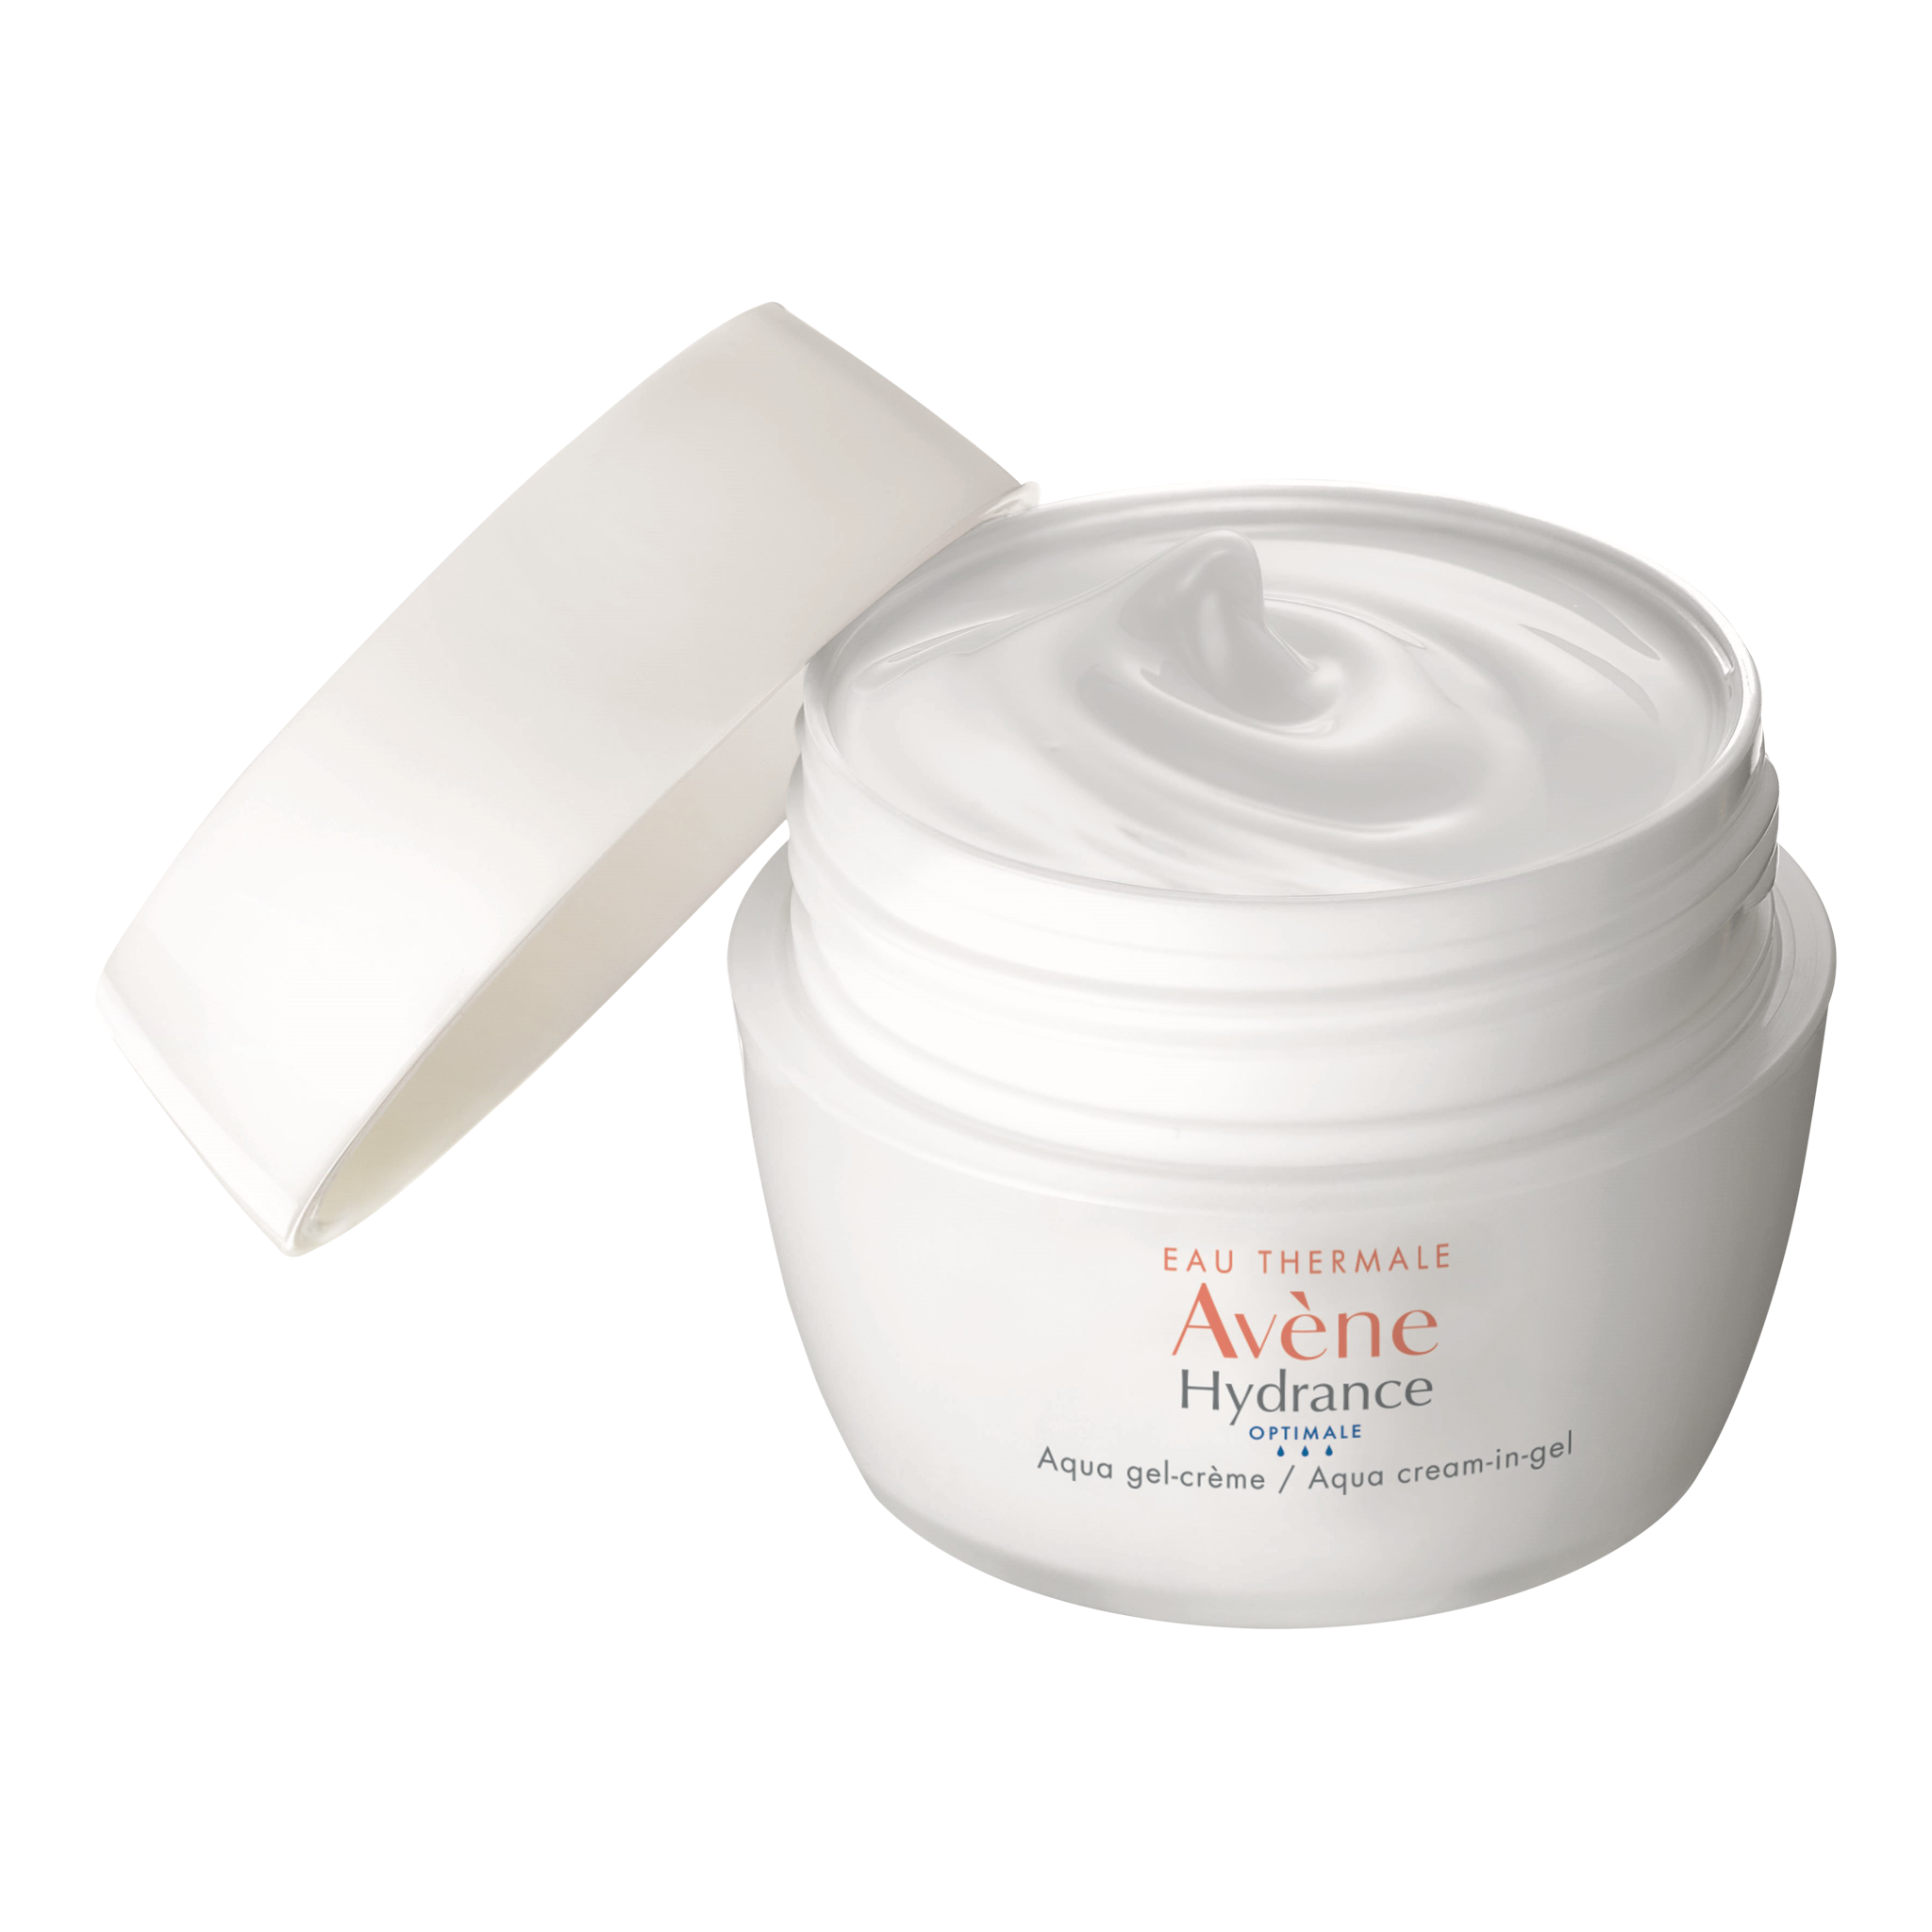 Avène Hydrance Optimale Aqua Cream-in-Gel 50ml - Moisturiser for Dehydrated Skin